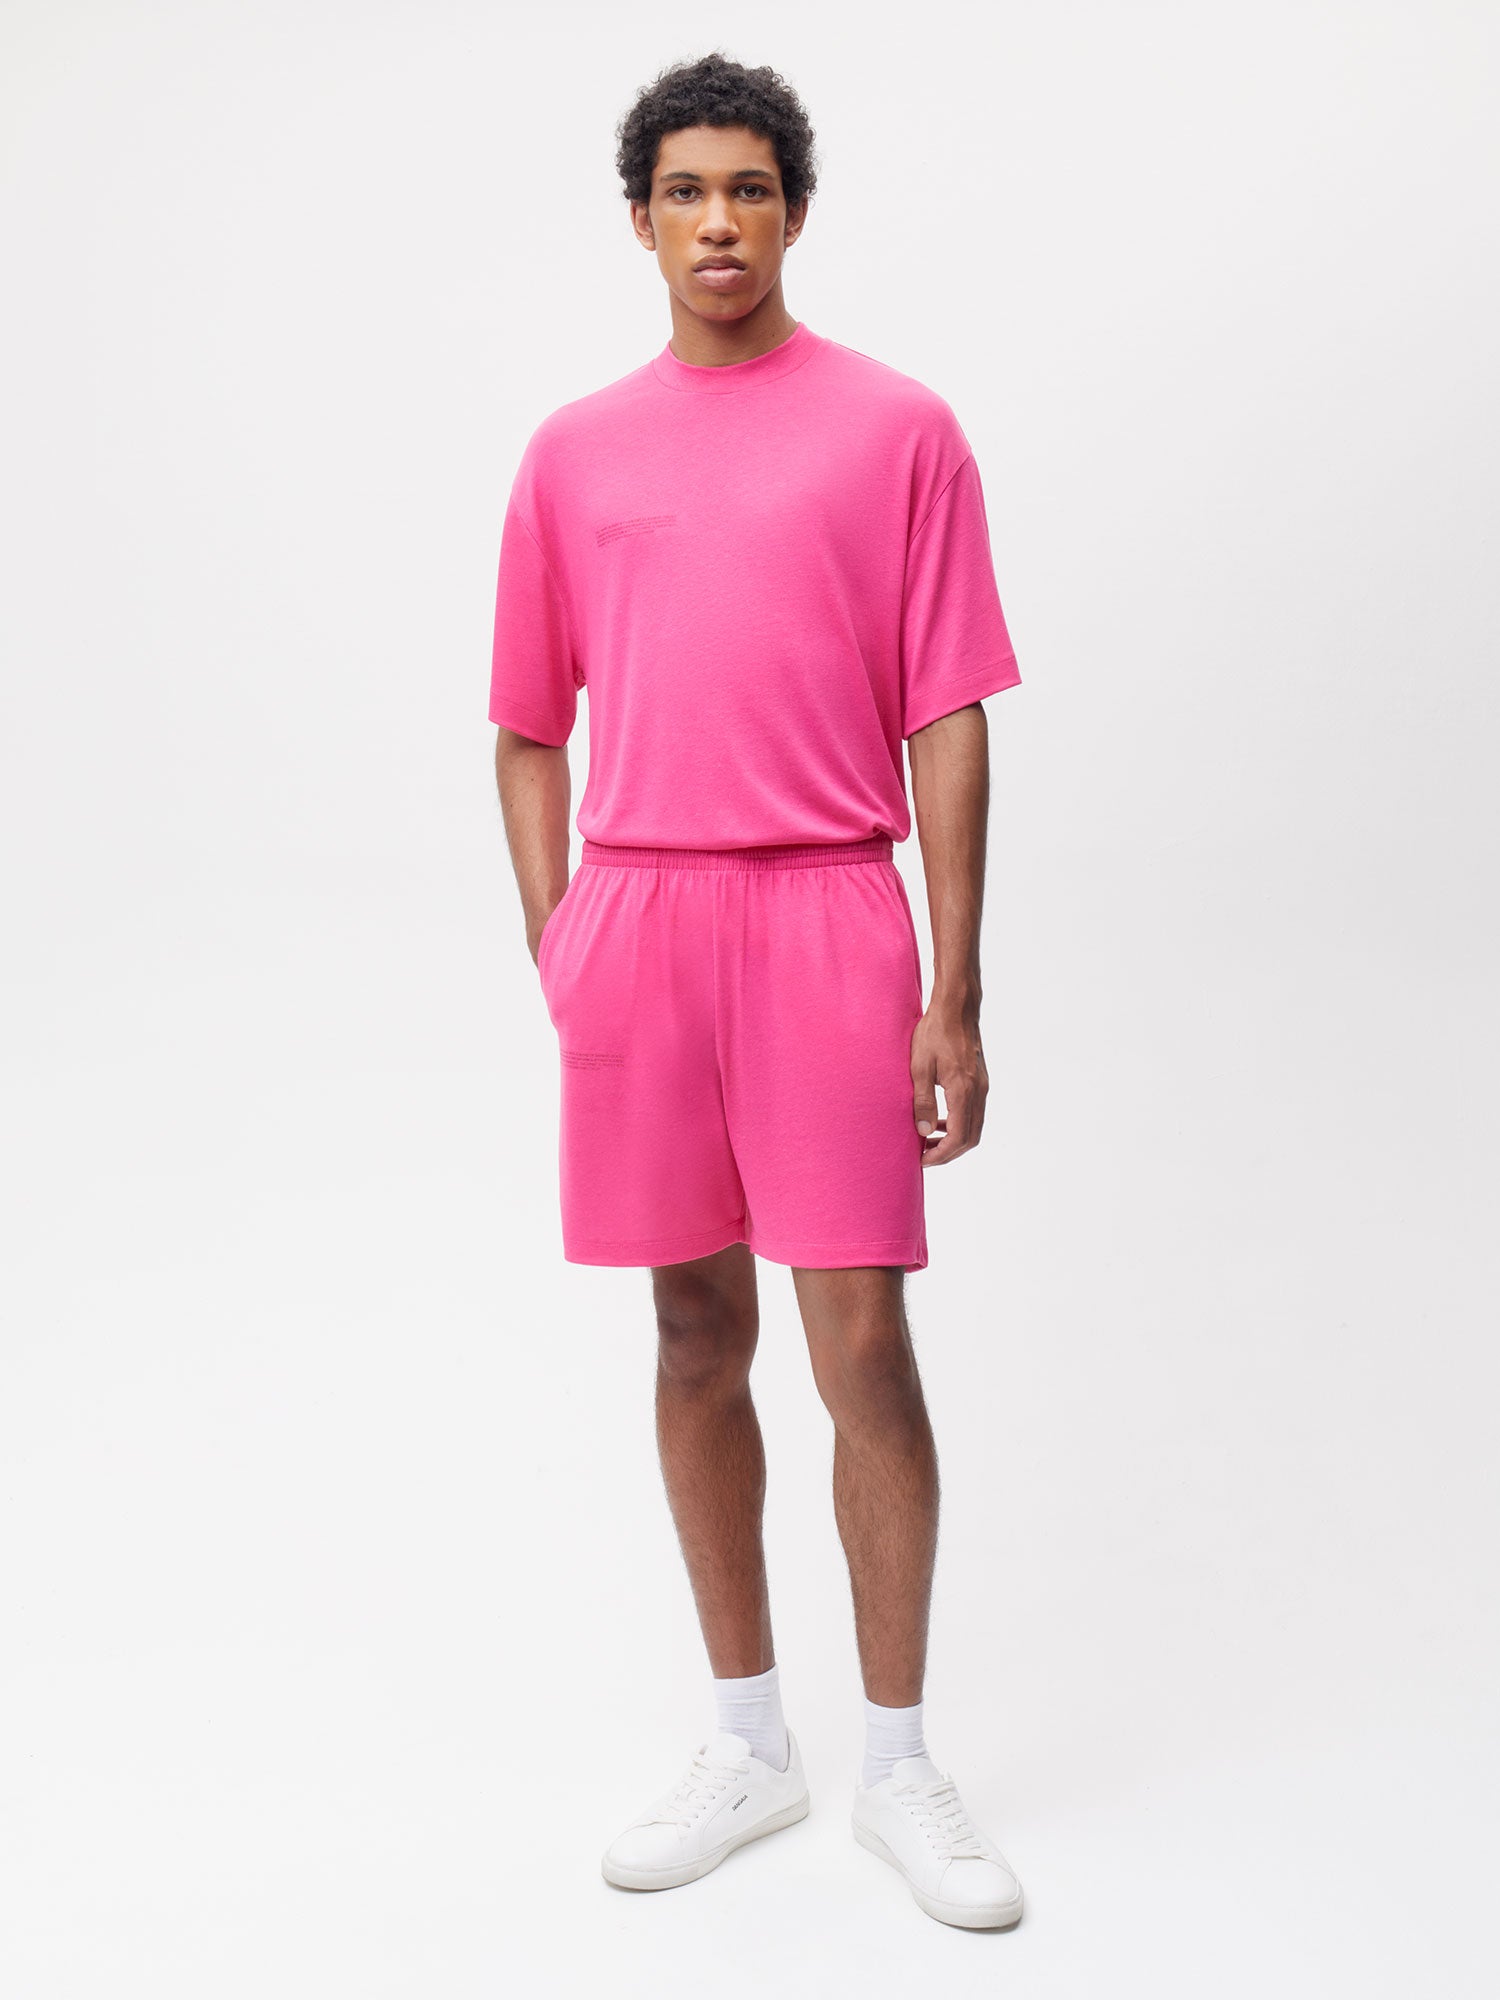 FRUTFIBER-Shorts-Tourmaline-Pink-Male-1